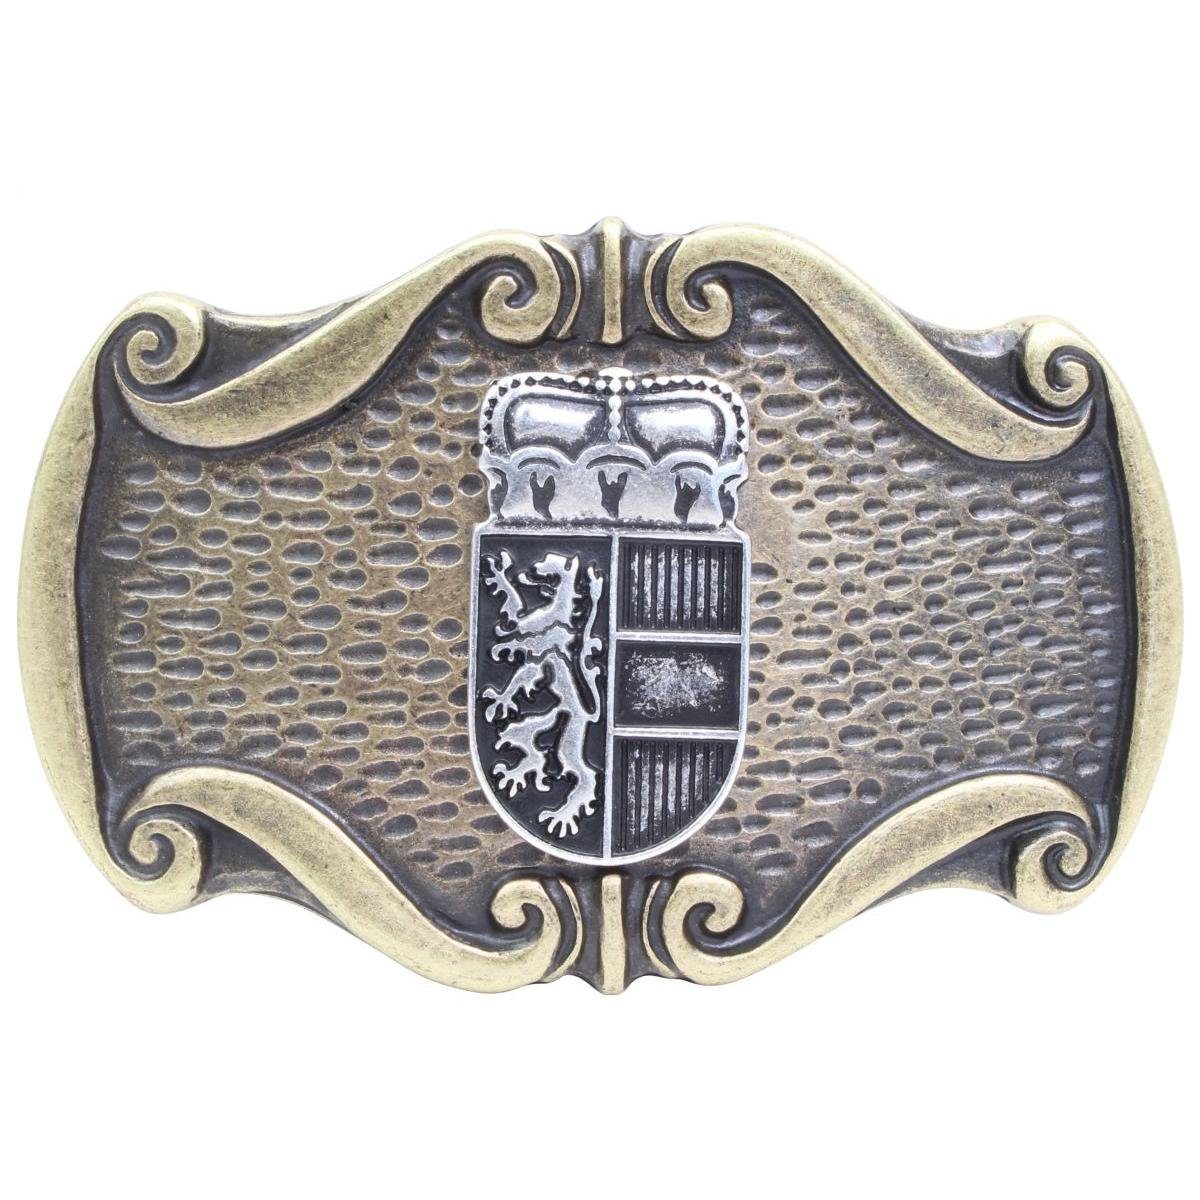 BELTINGER Gürtelschnalle Wappen Salzburg 4,0 cm - Buckle Wechselschließe Gürtelschließe 40mm - bicolor g/s